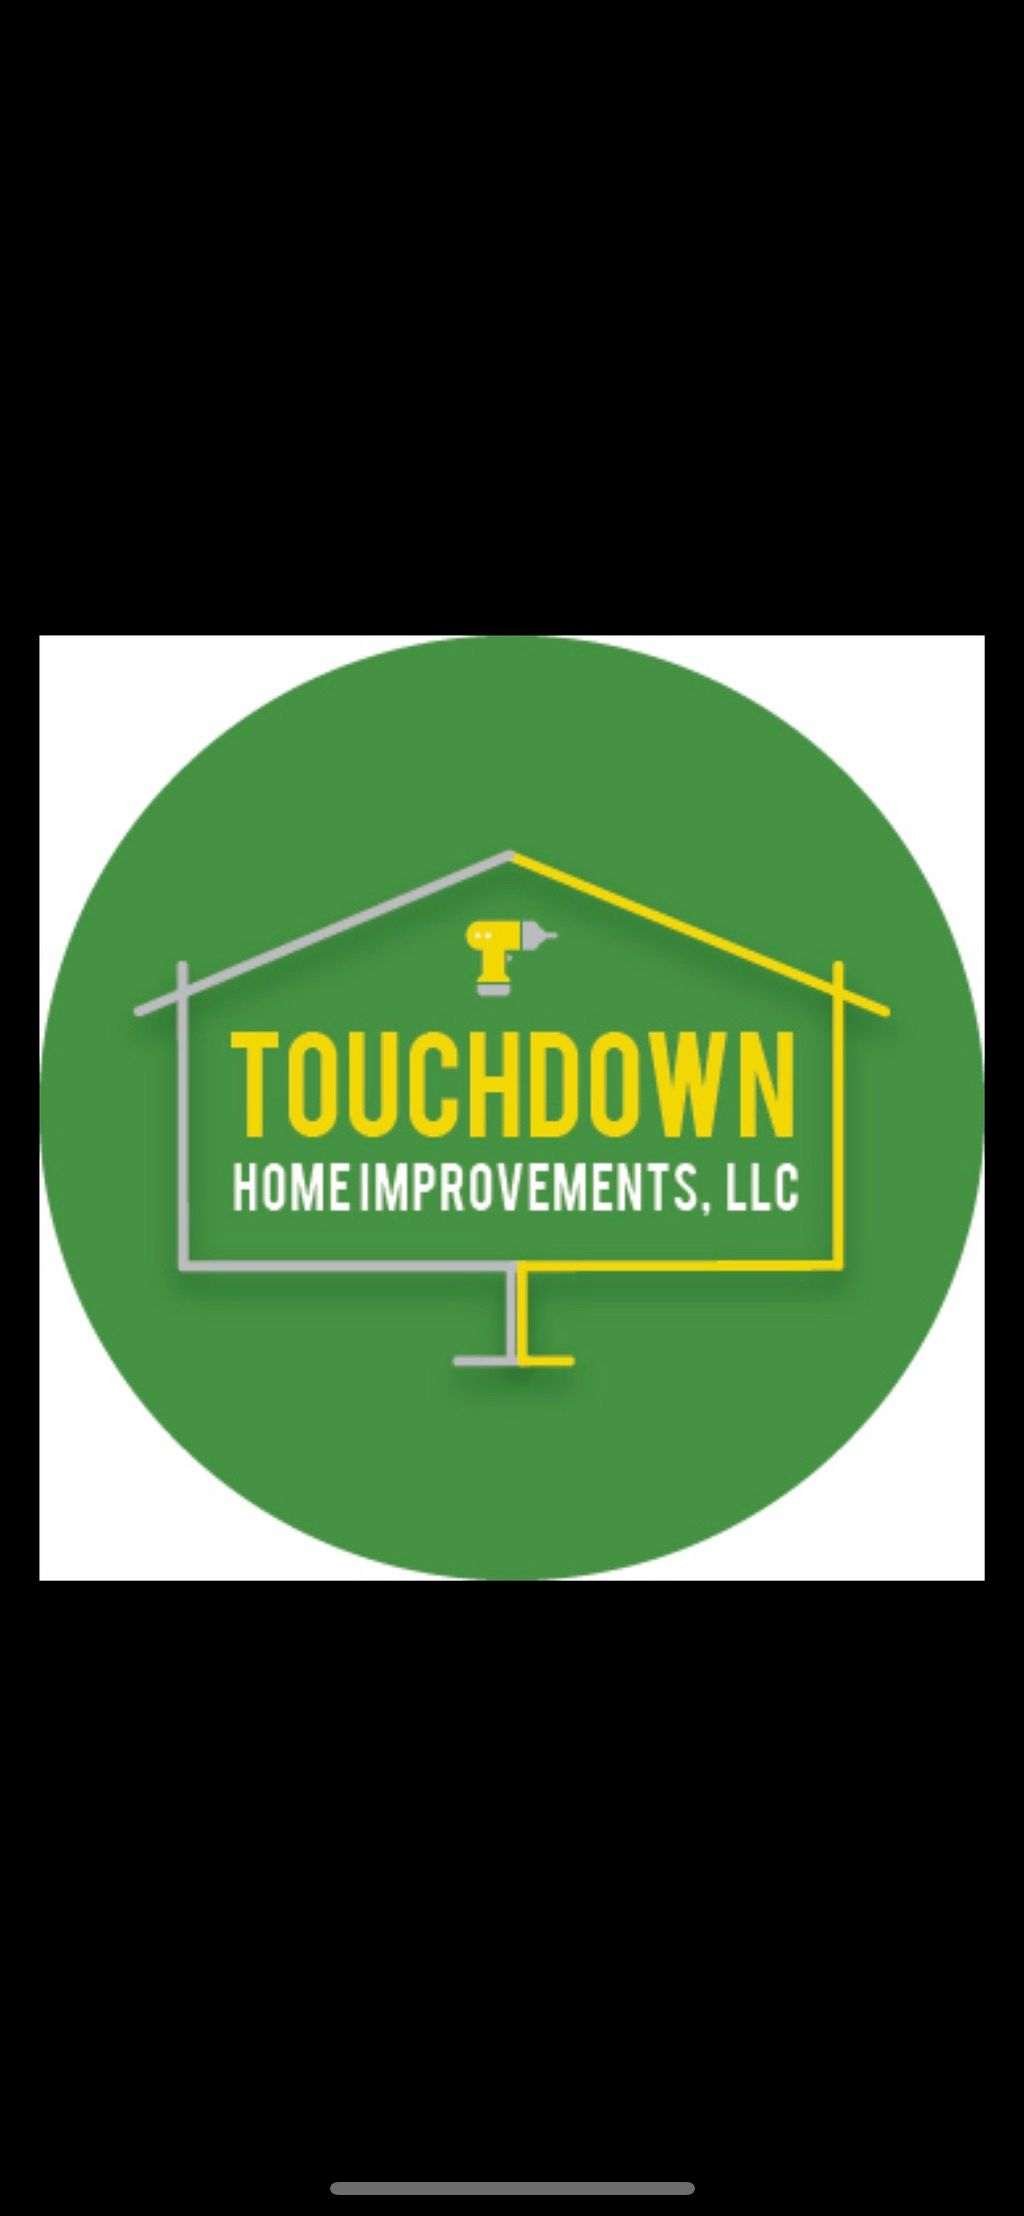 Touchdown Home Improvements LLC